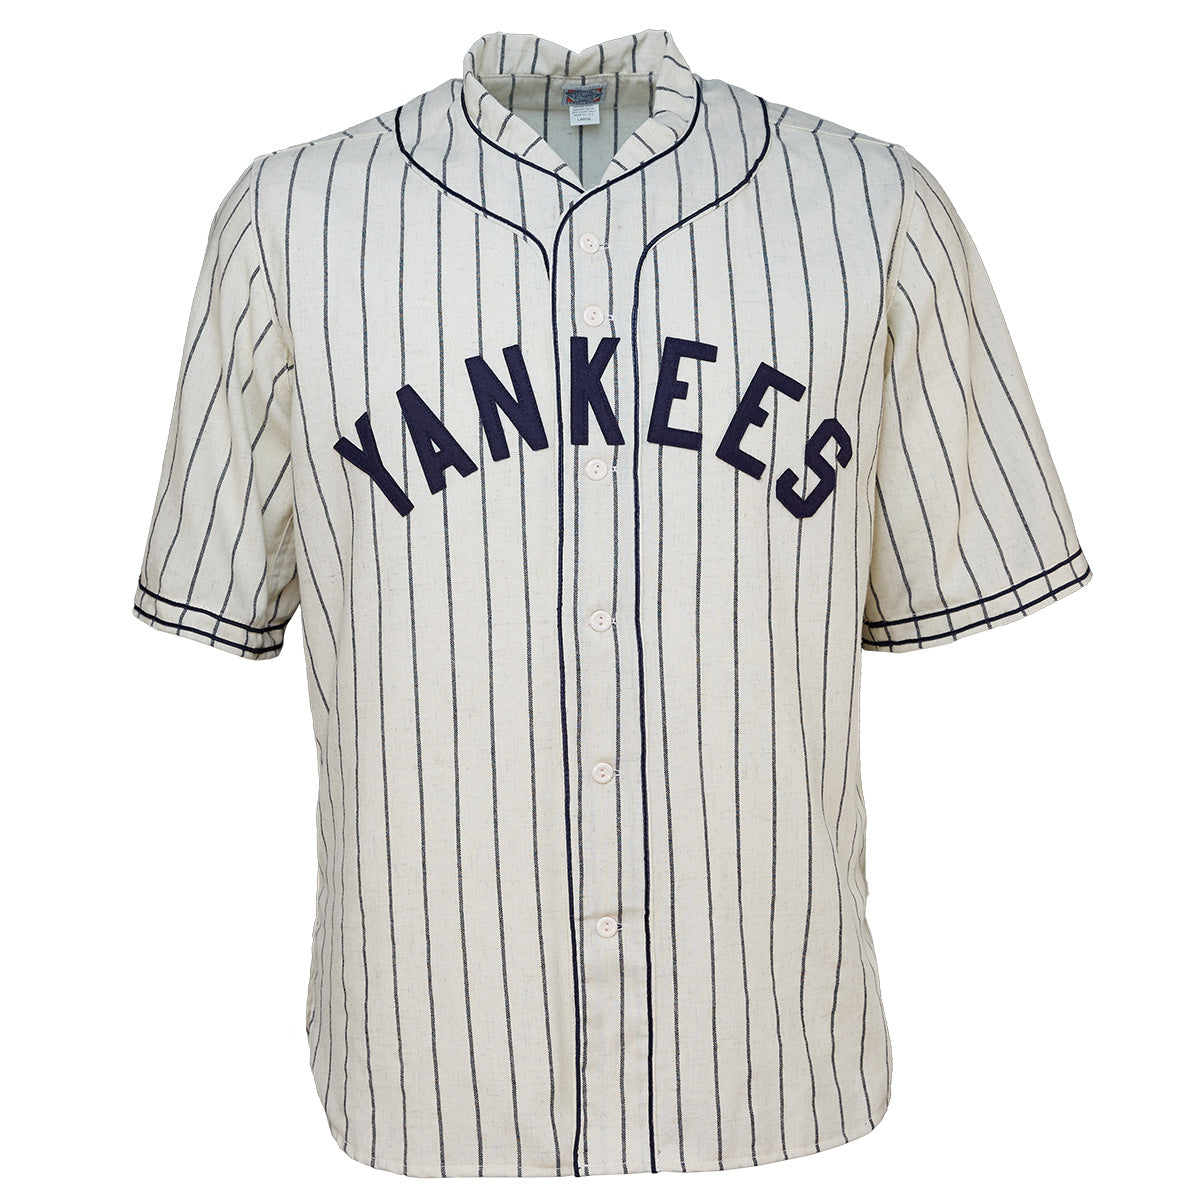 new york yankees old uniforms